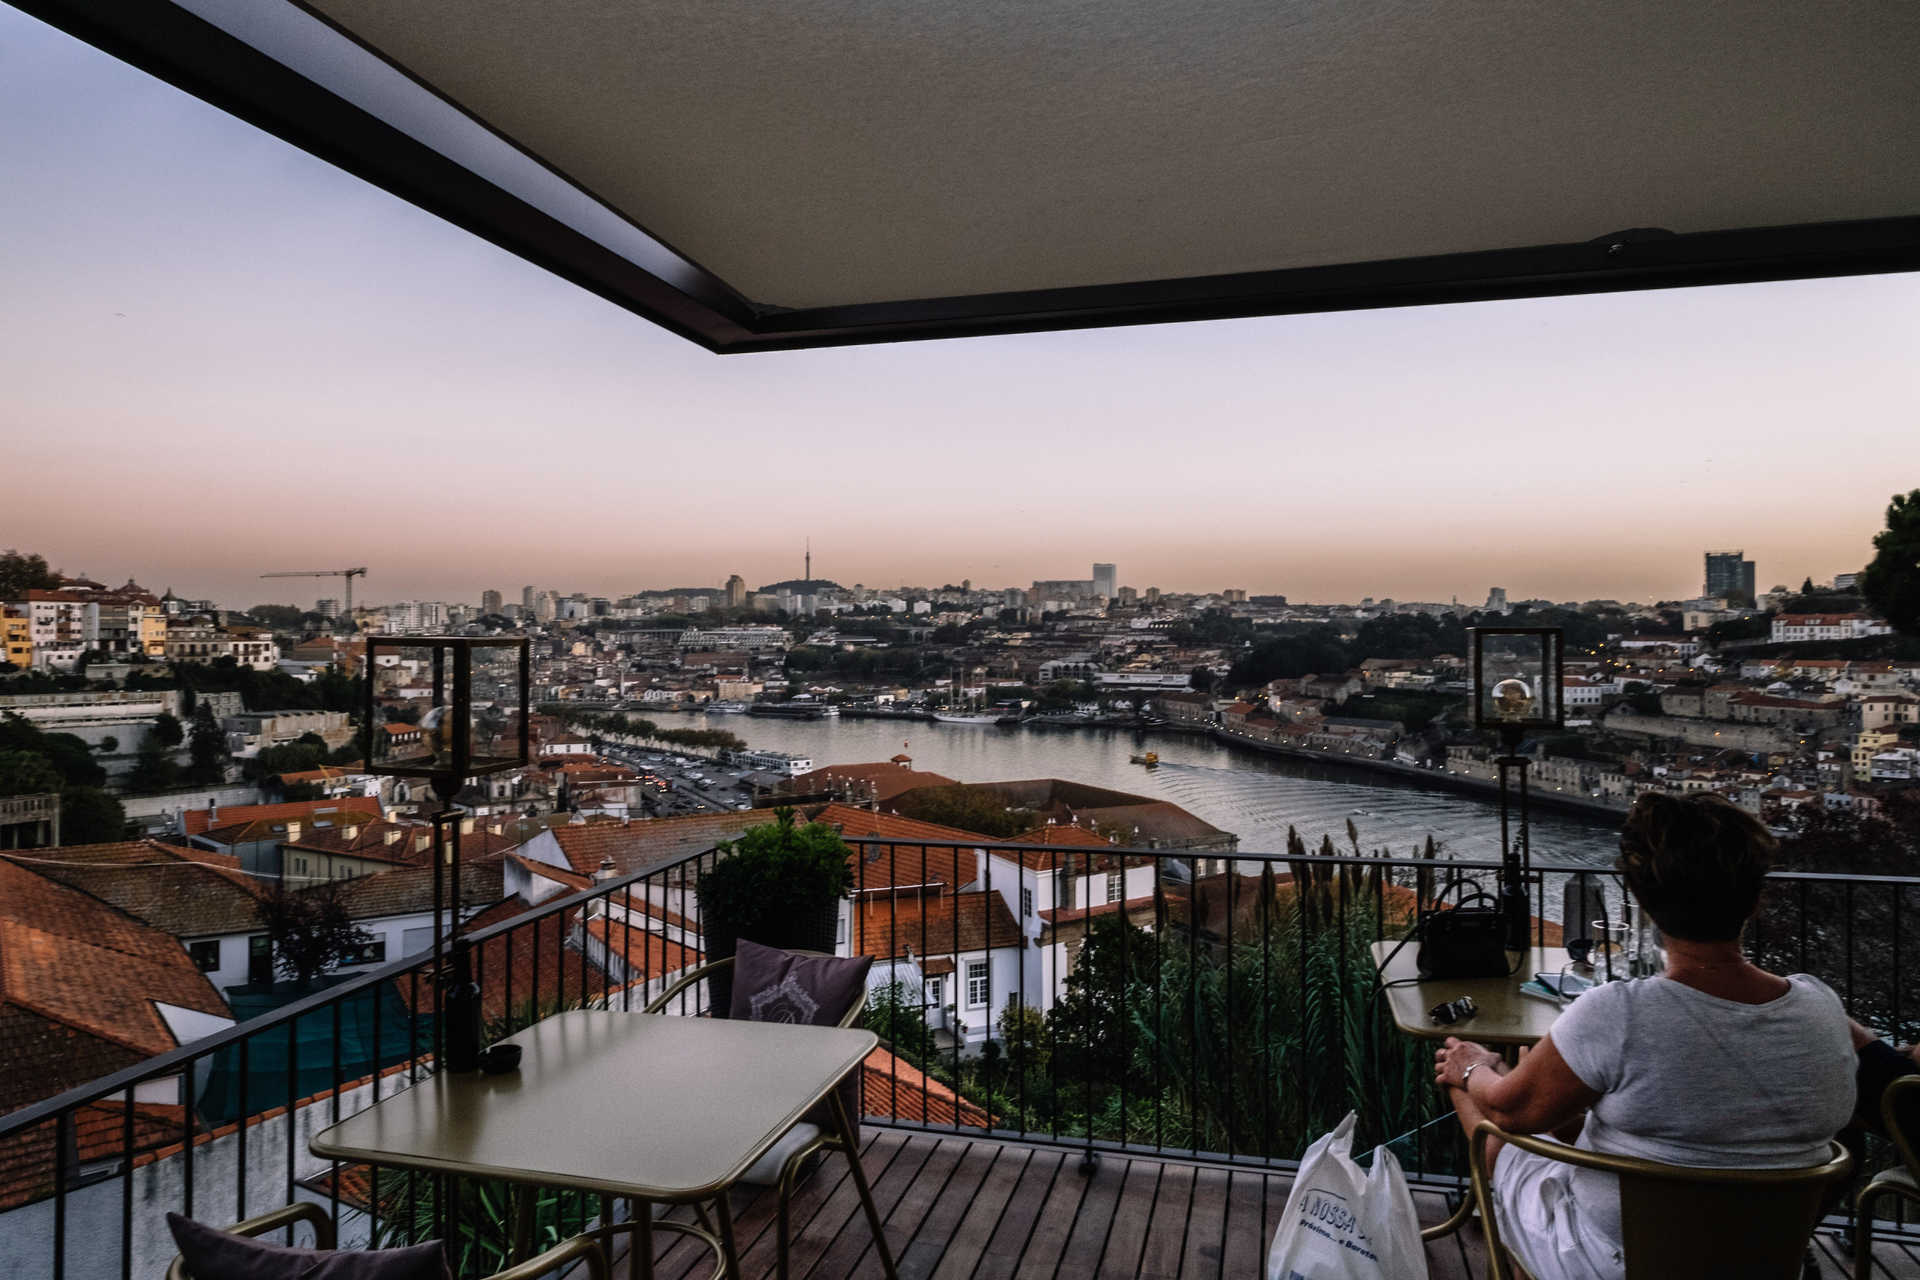 Novo Hotel Torel AvantGarde, na cidade do Porto.